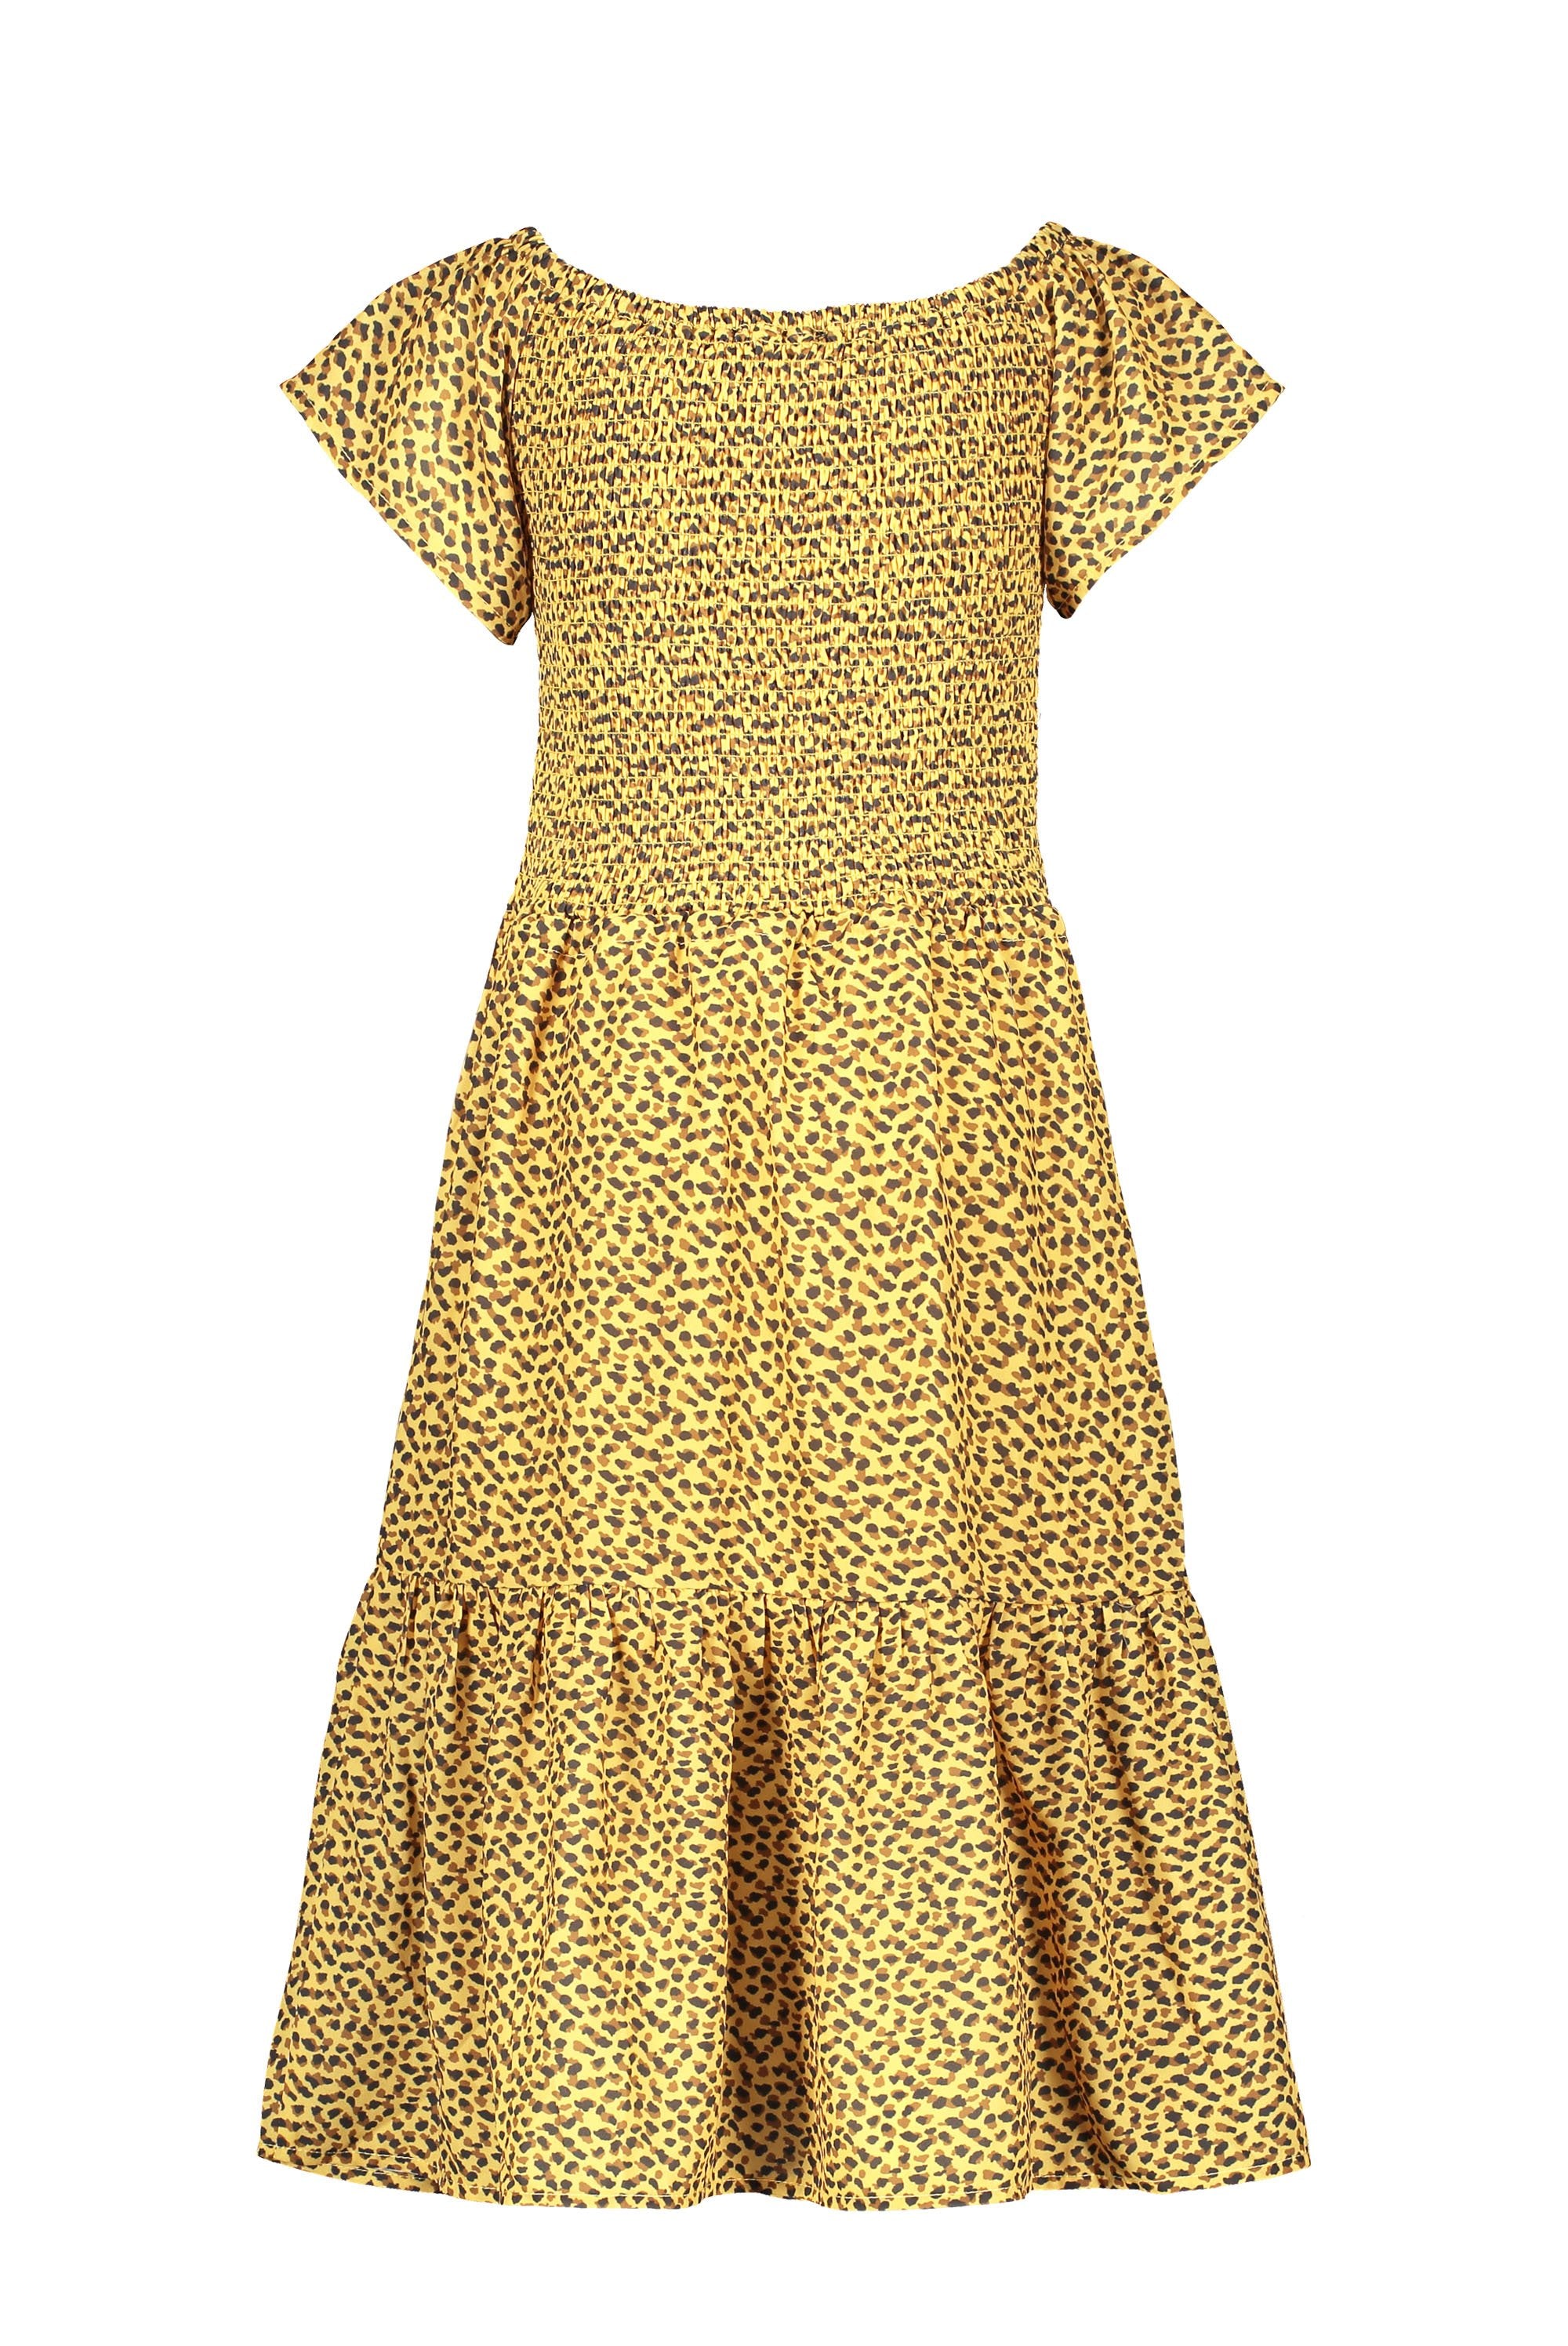 Meisjes Flo girls AO woven smock maxi dress van Like Flo in de kleur Panther in maat 152.